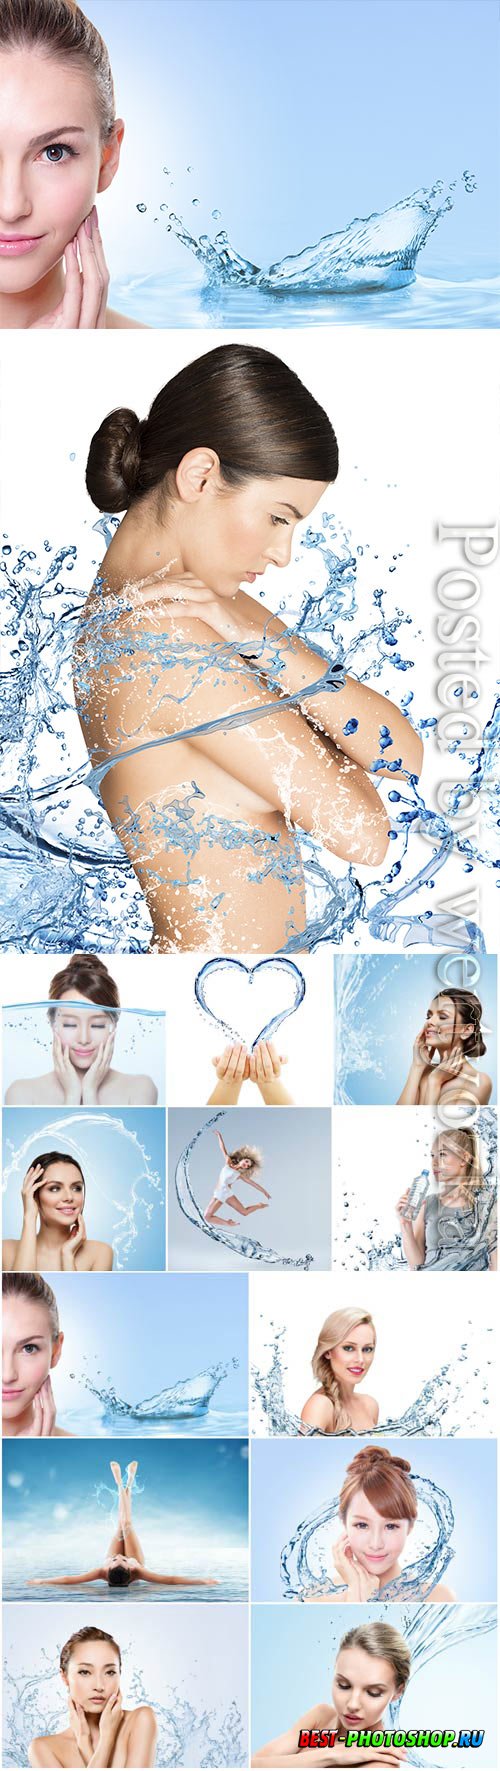 Girls splashing water stock photo